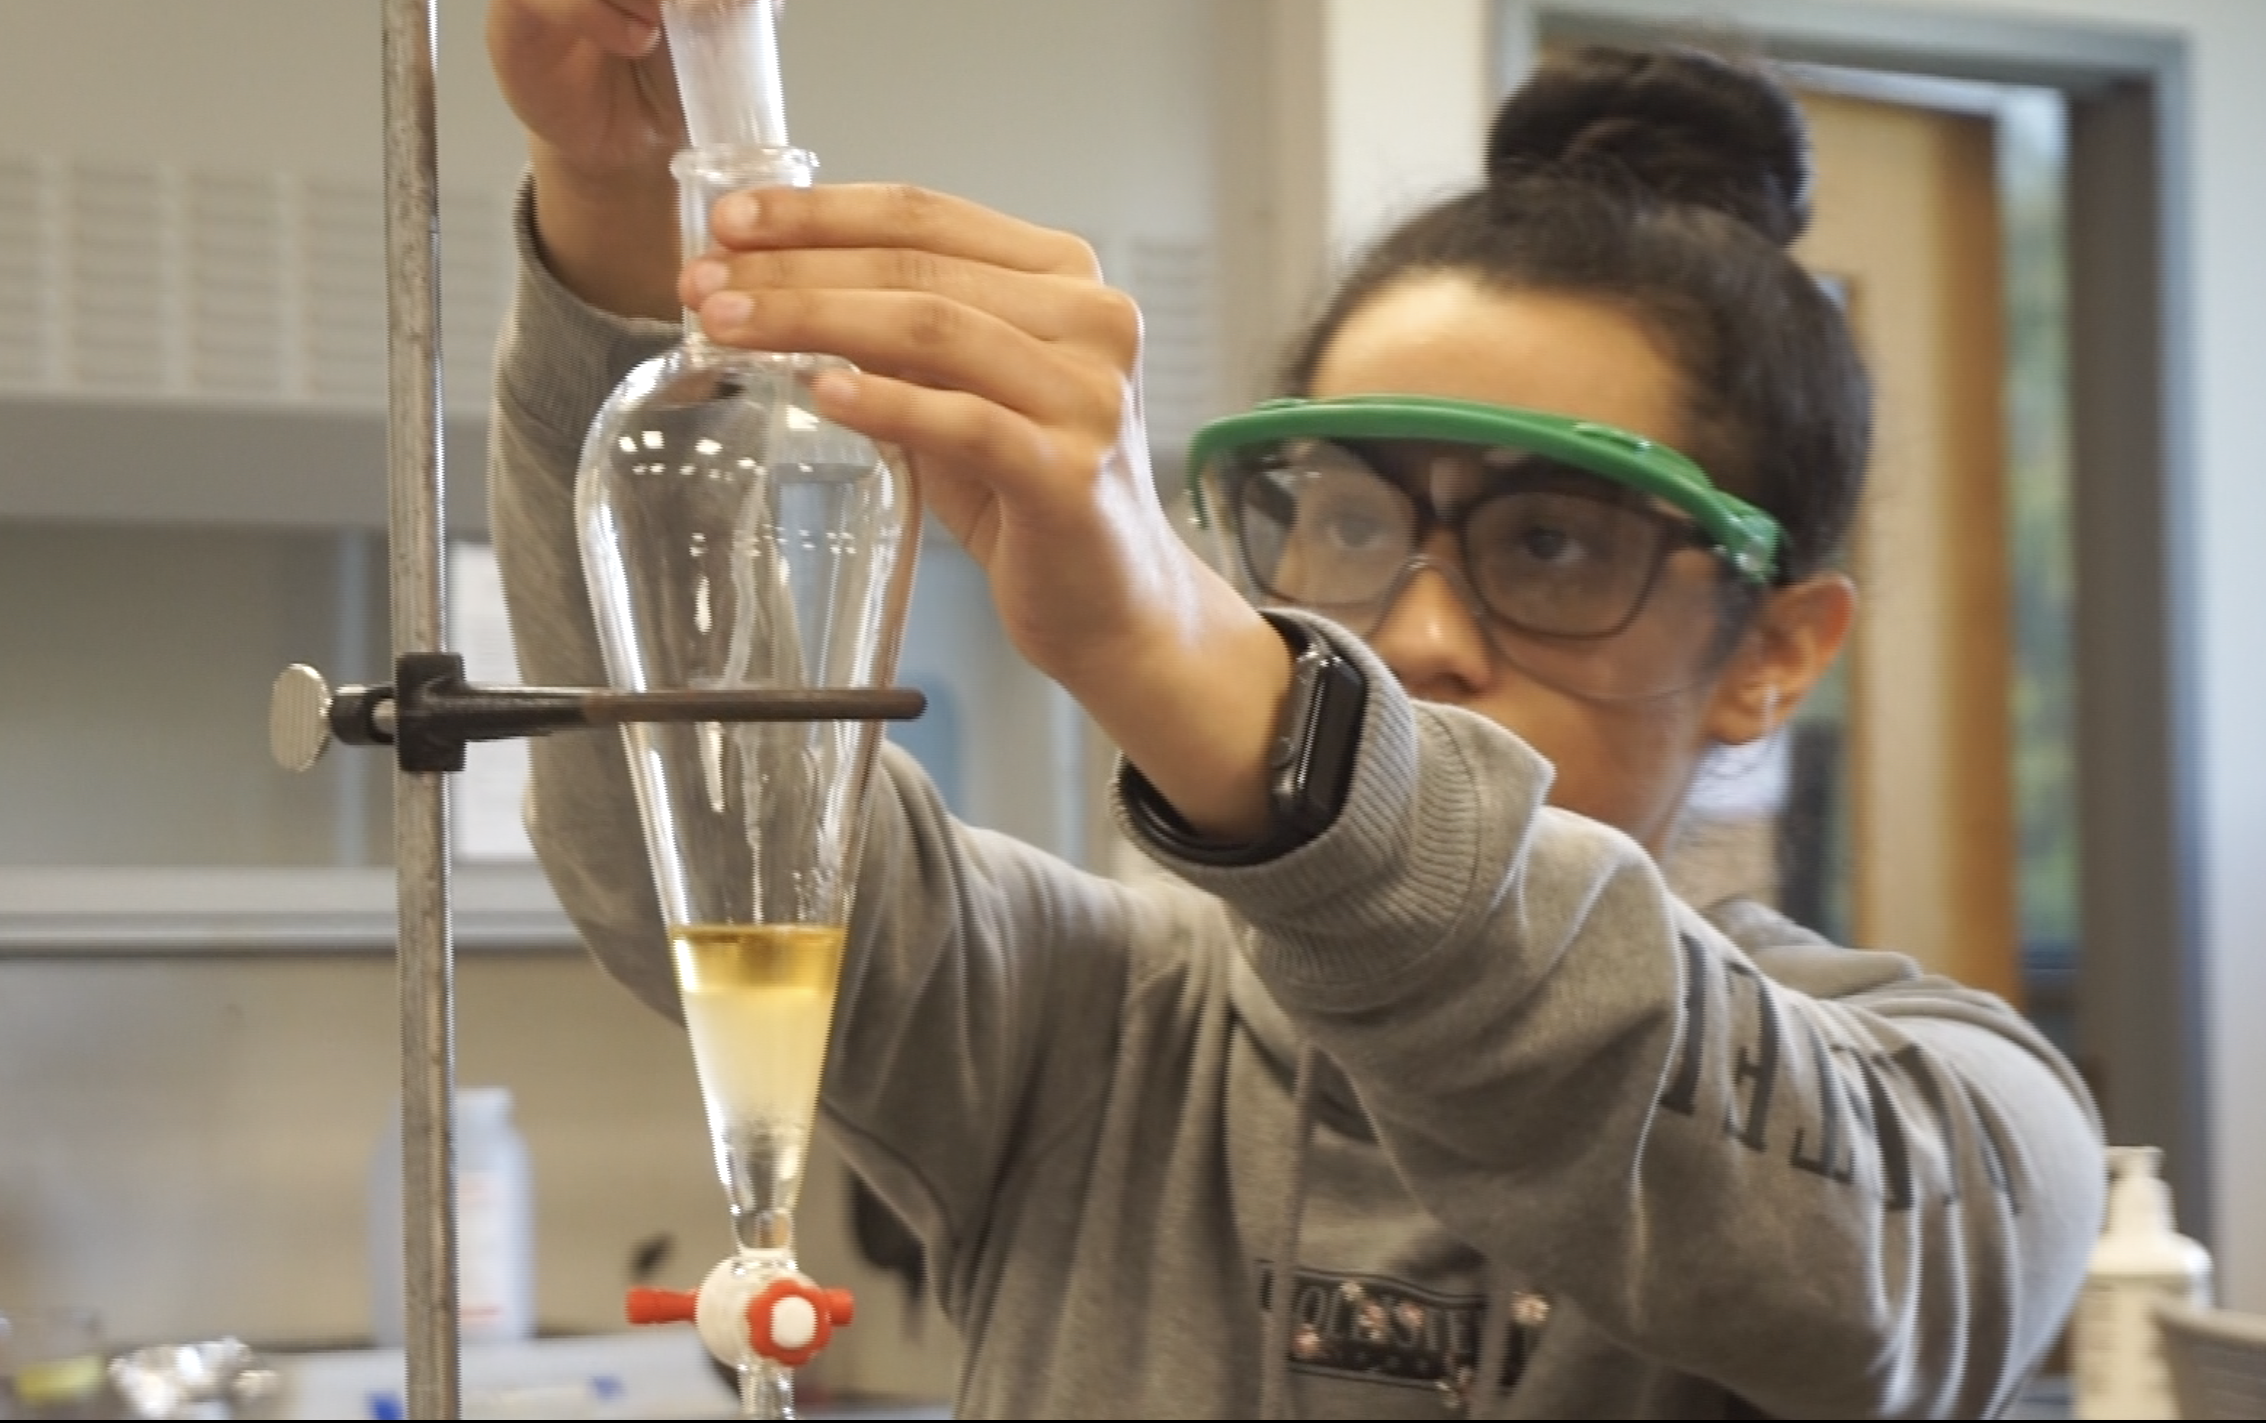 Chemistry student drops liquid into a tubular beaker